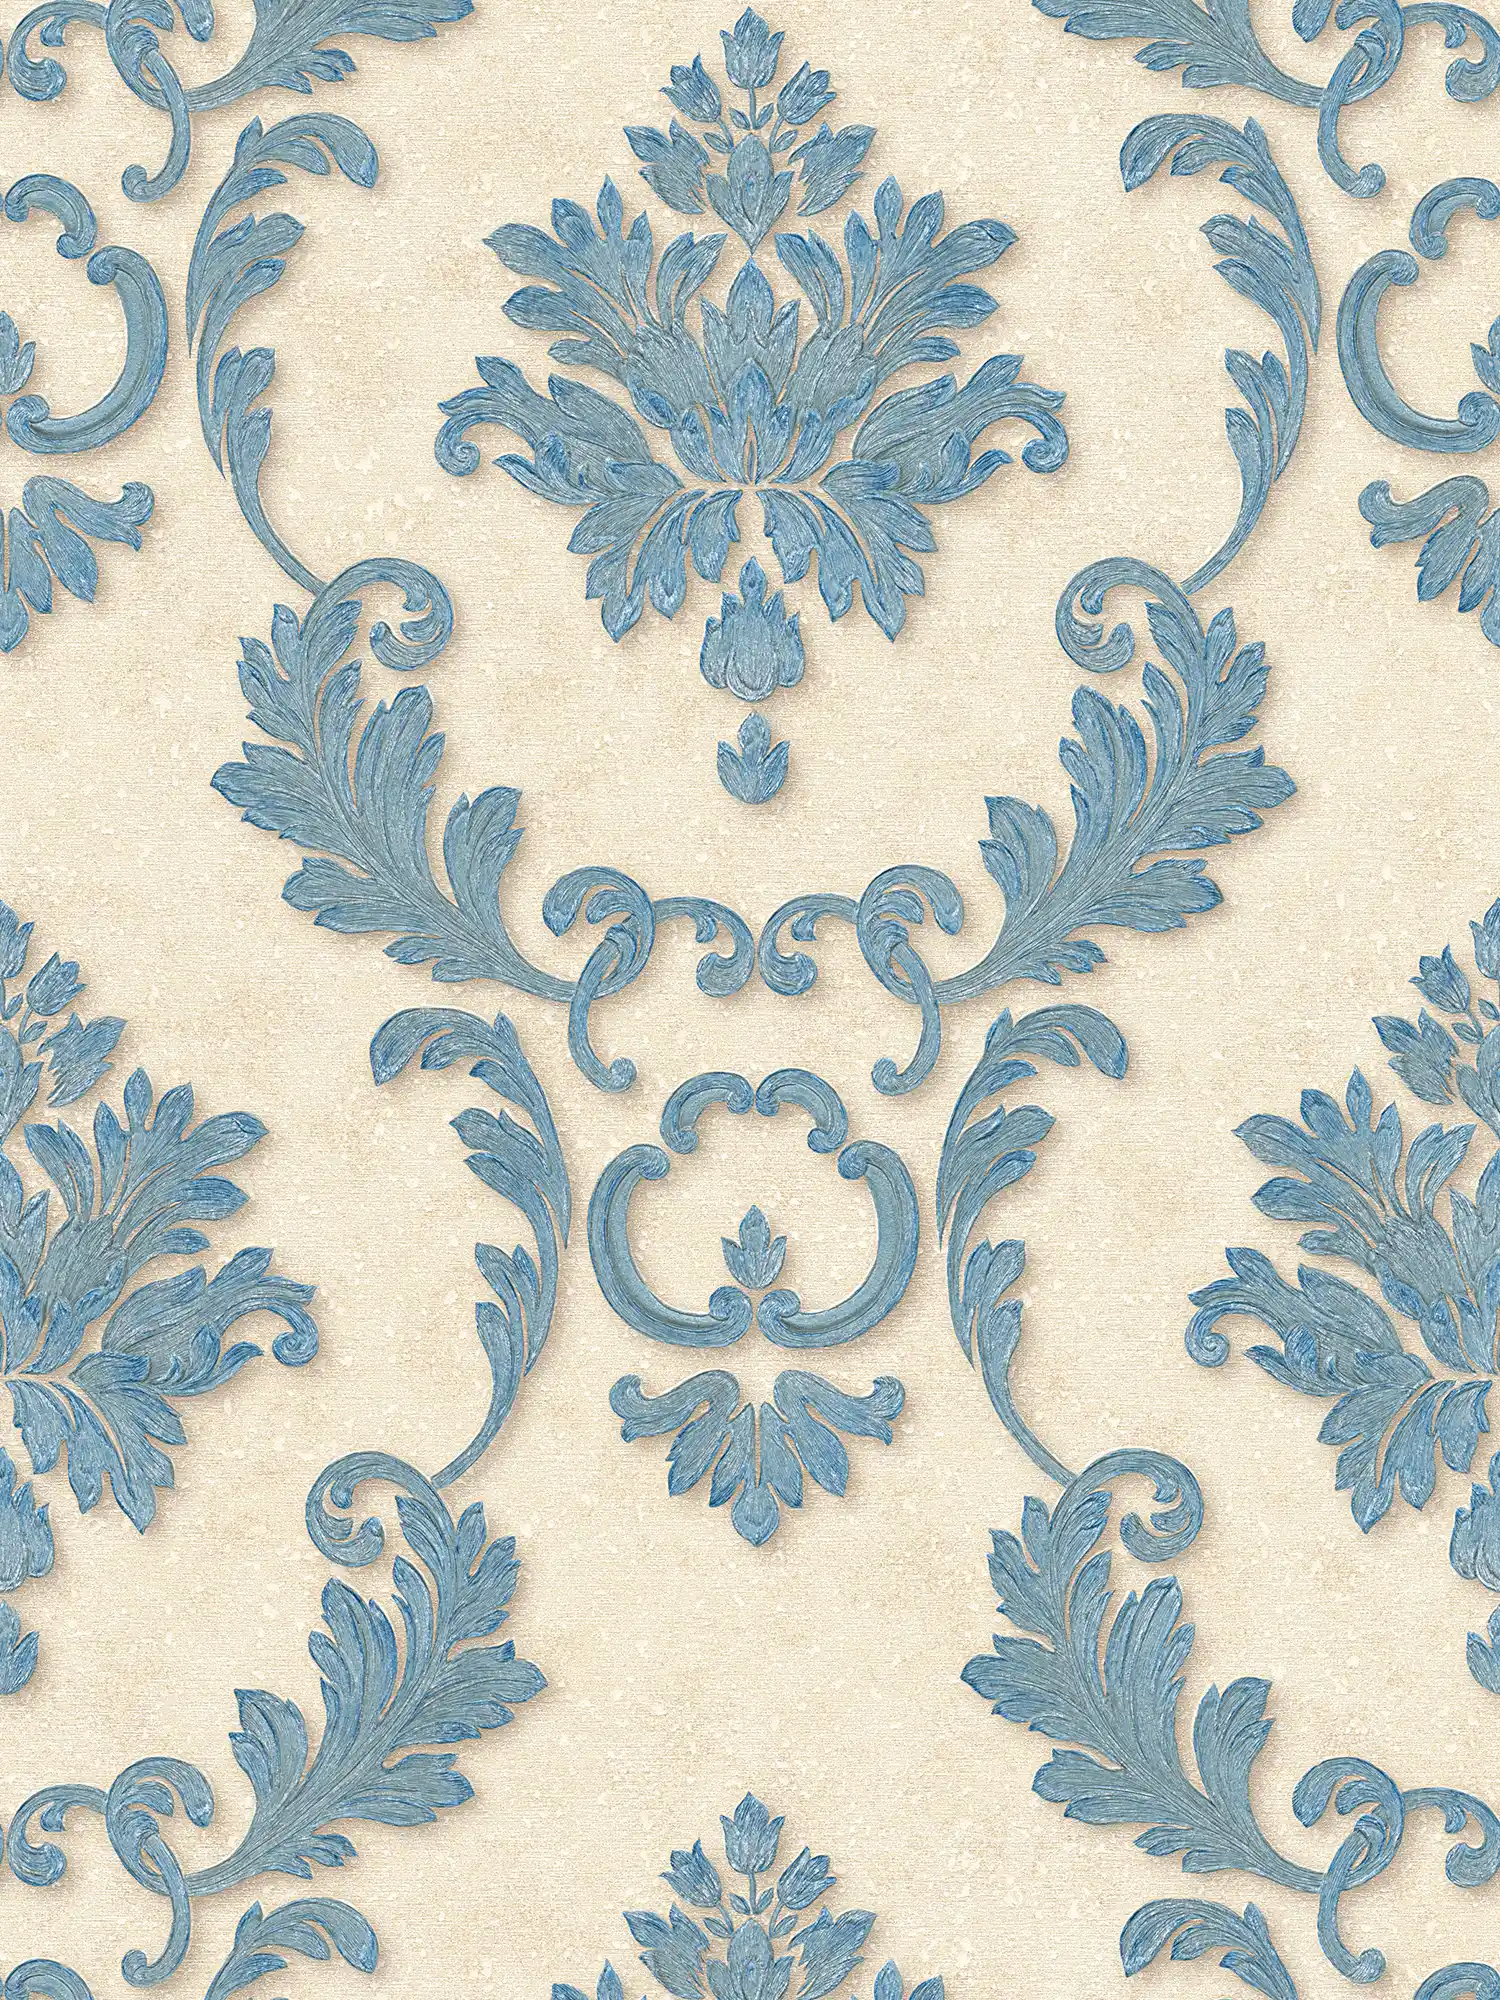         Designer wallpaper floral ornaments & metallic effect - blue, gold, cream
    